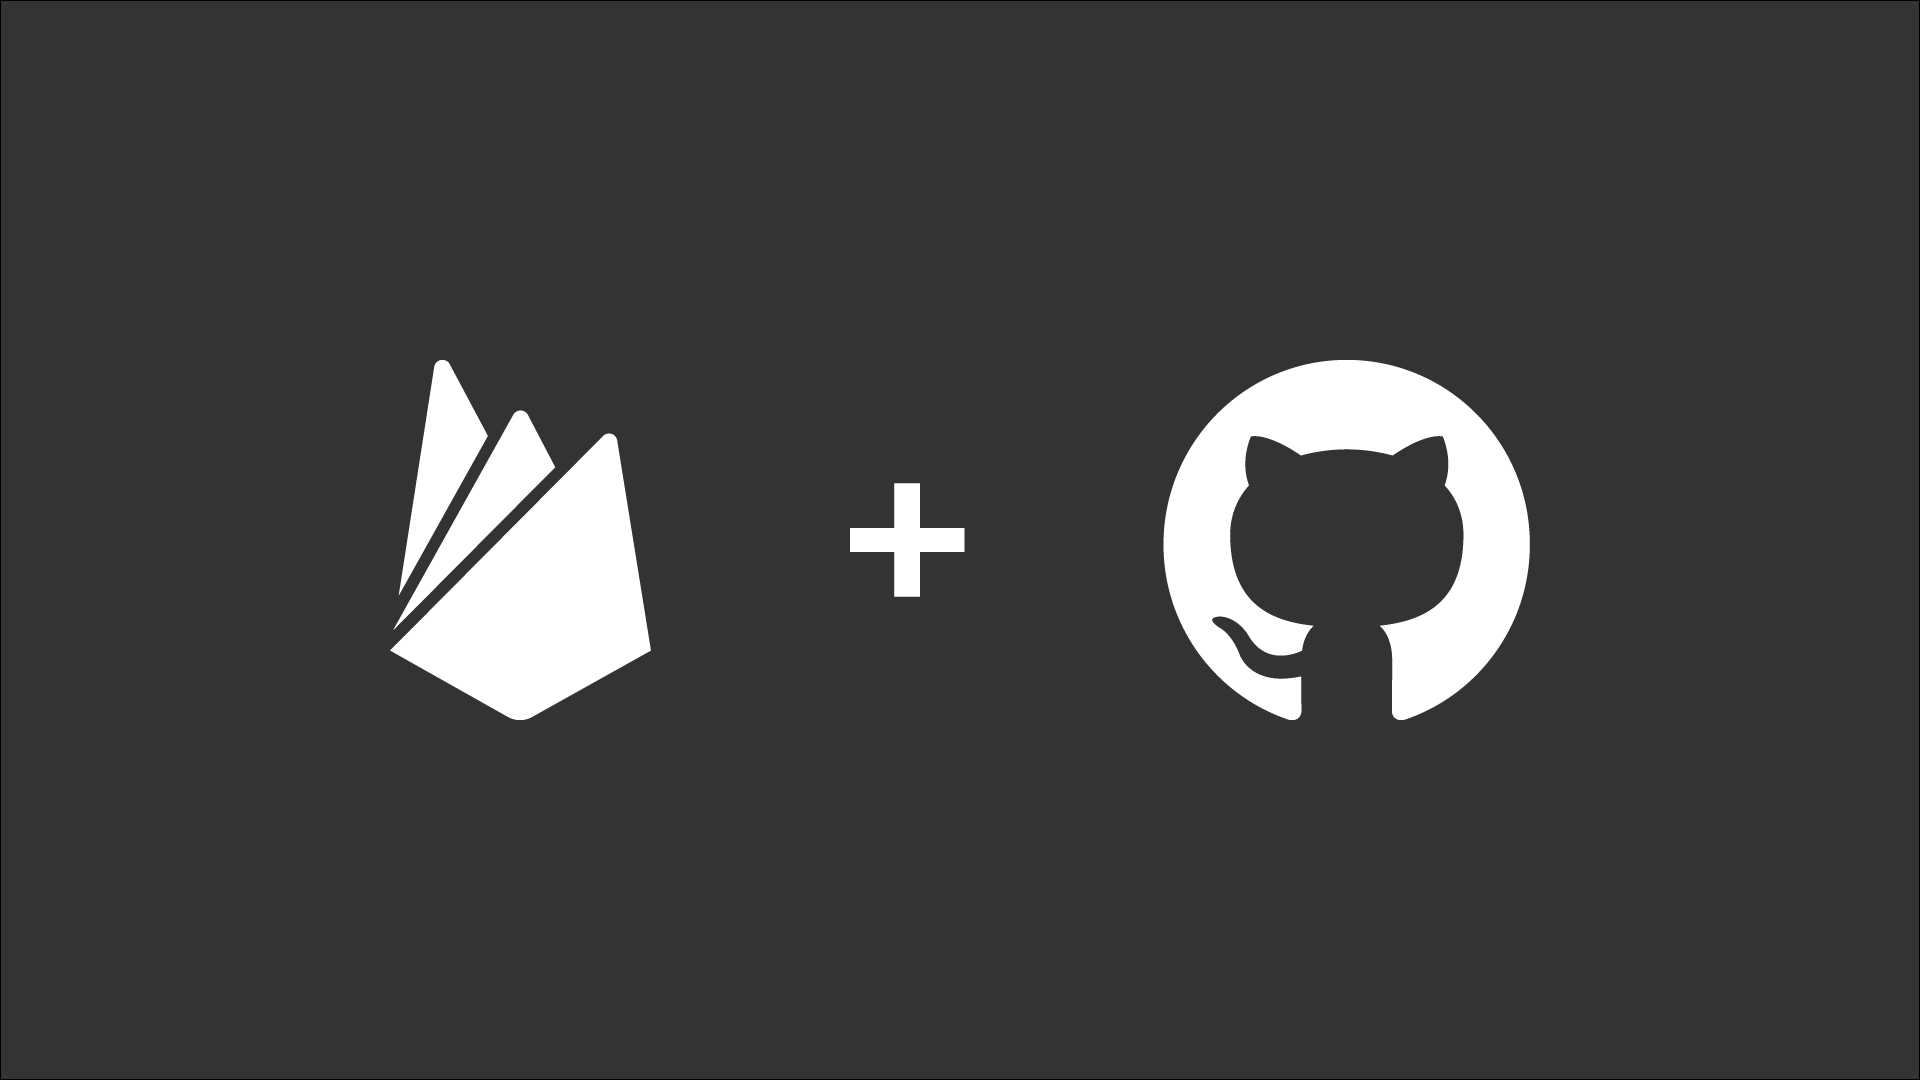 a black and white image of firebase logo, plus sign, and github logo